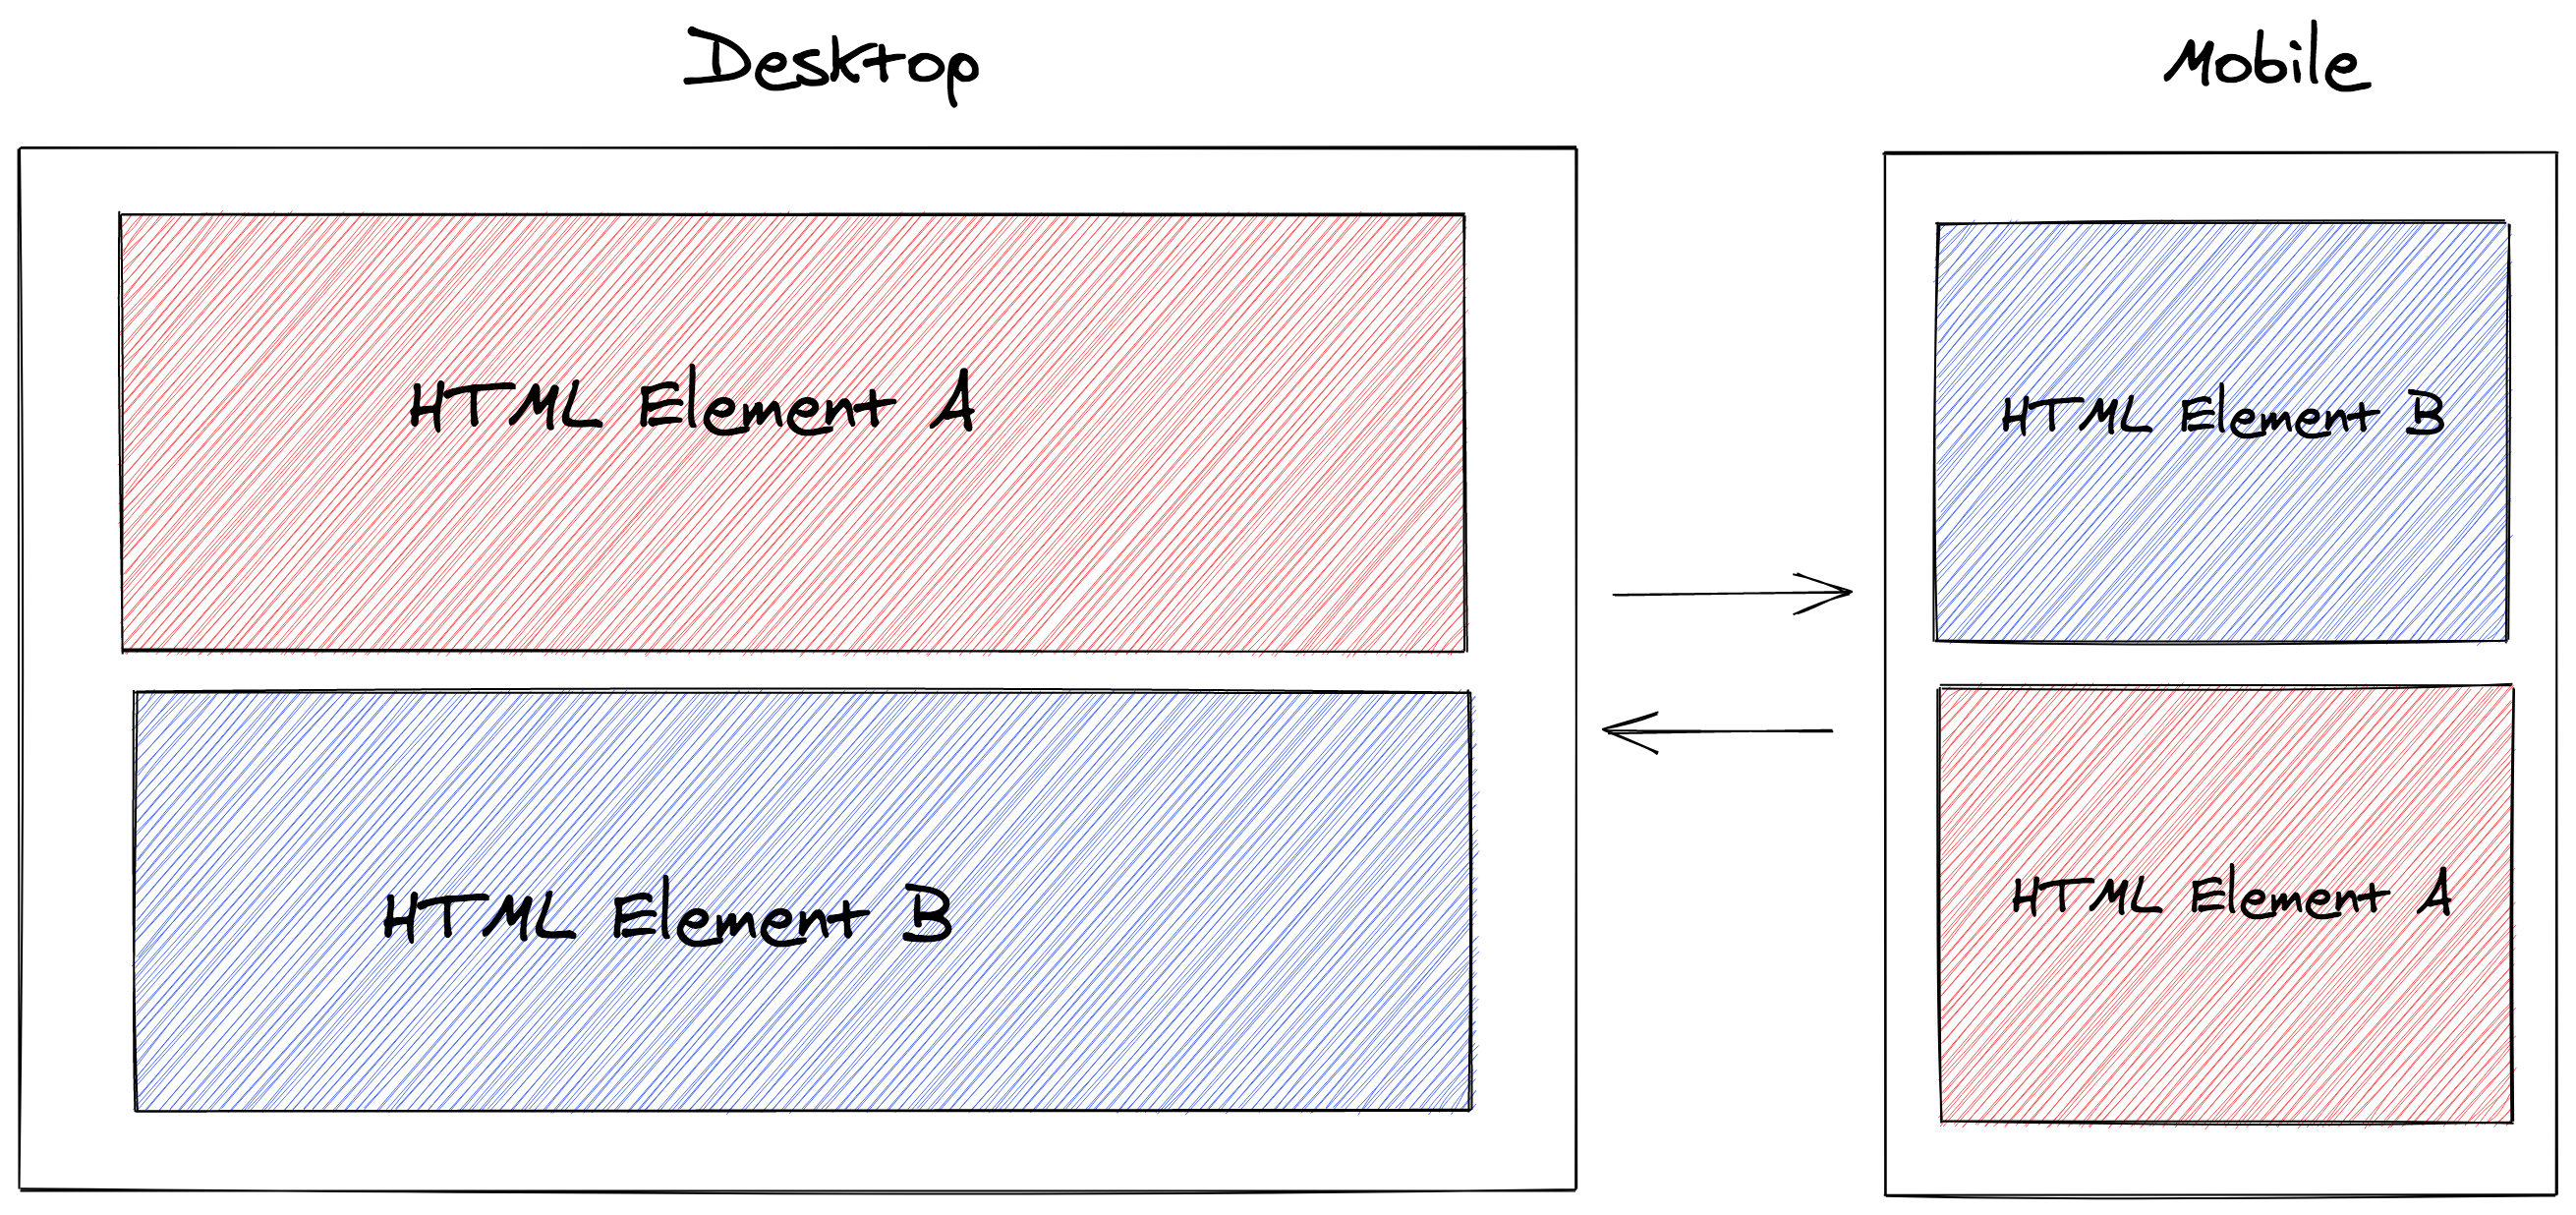 html elements order change based on layout